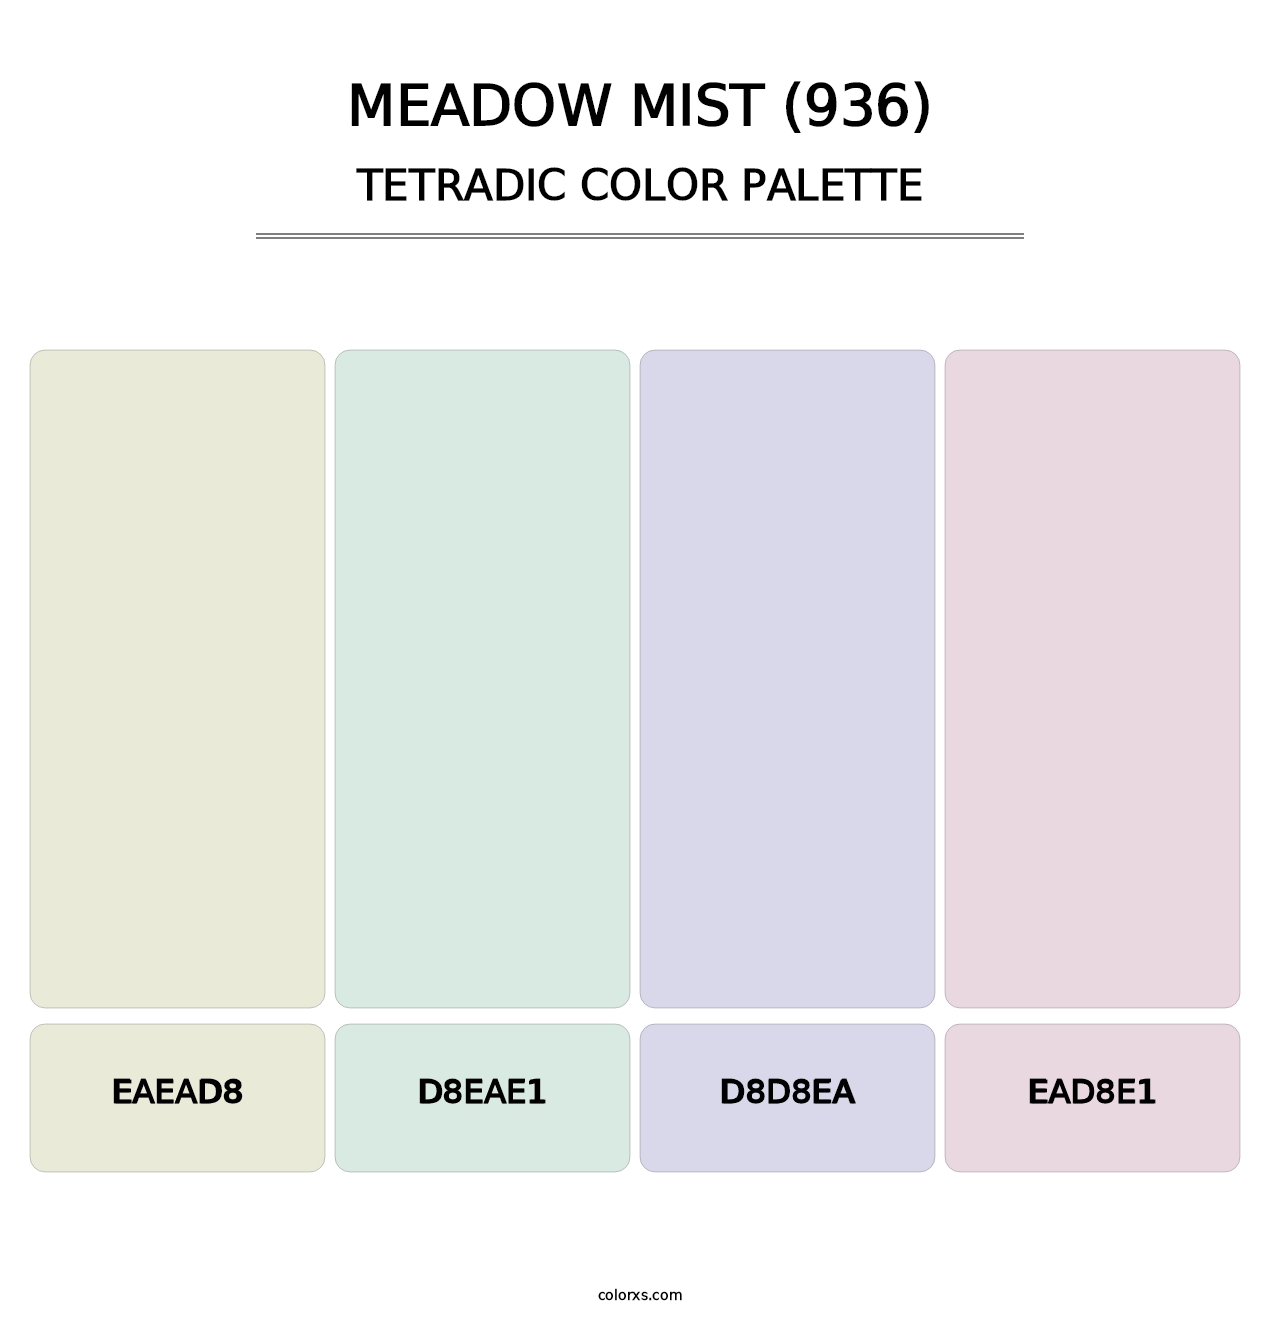 Meadow Mist (936) - Tetradic Color Palette